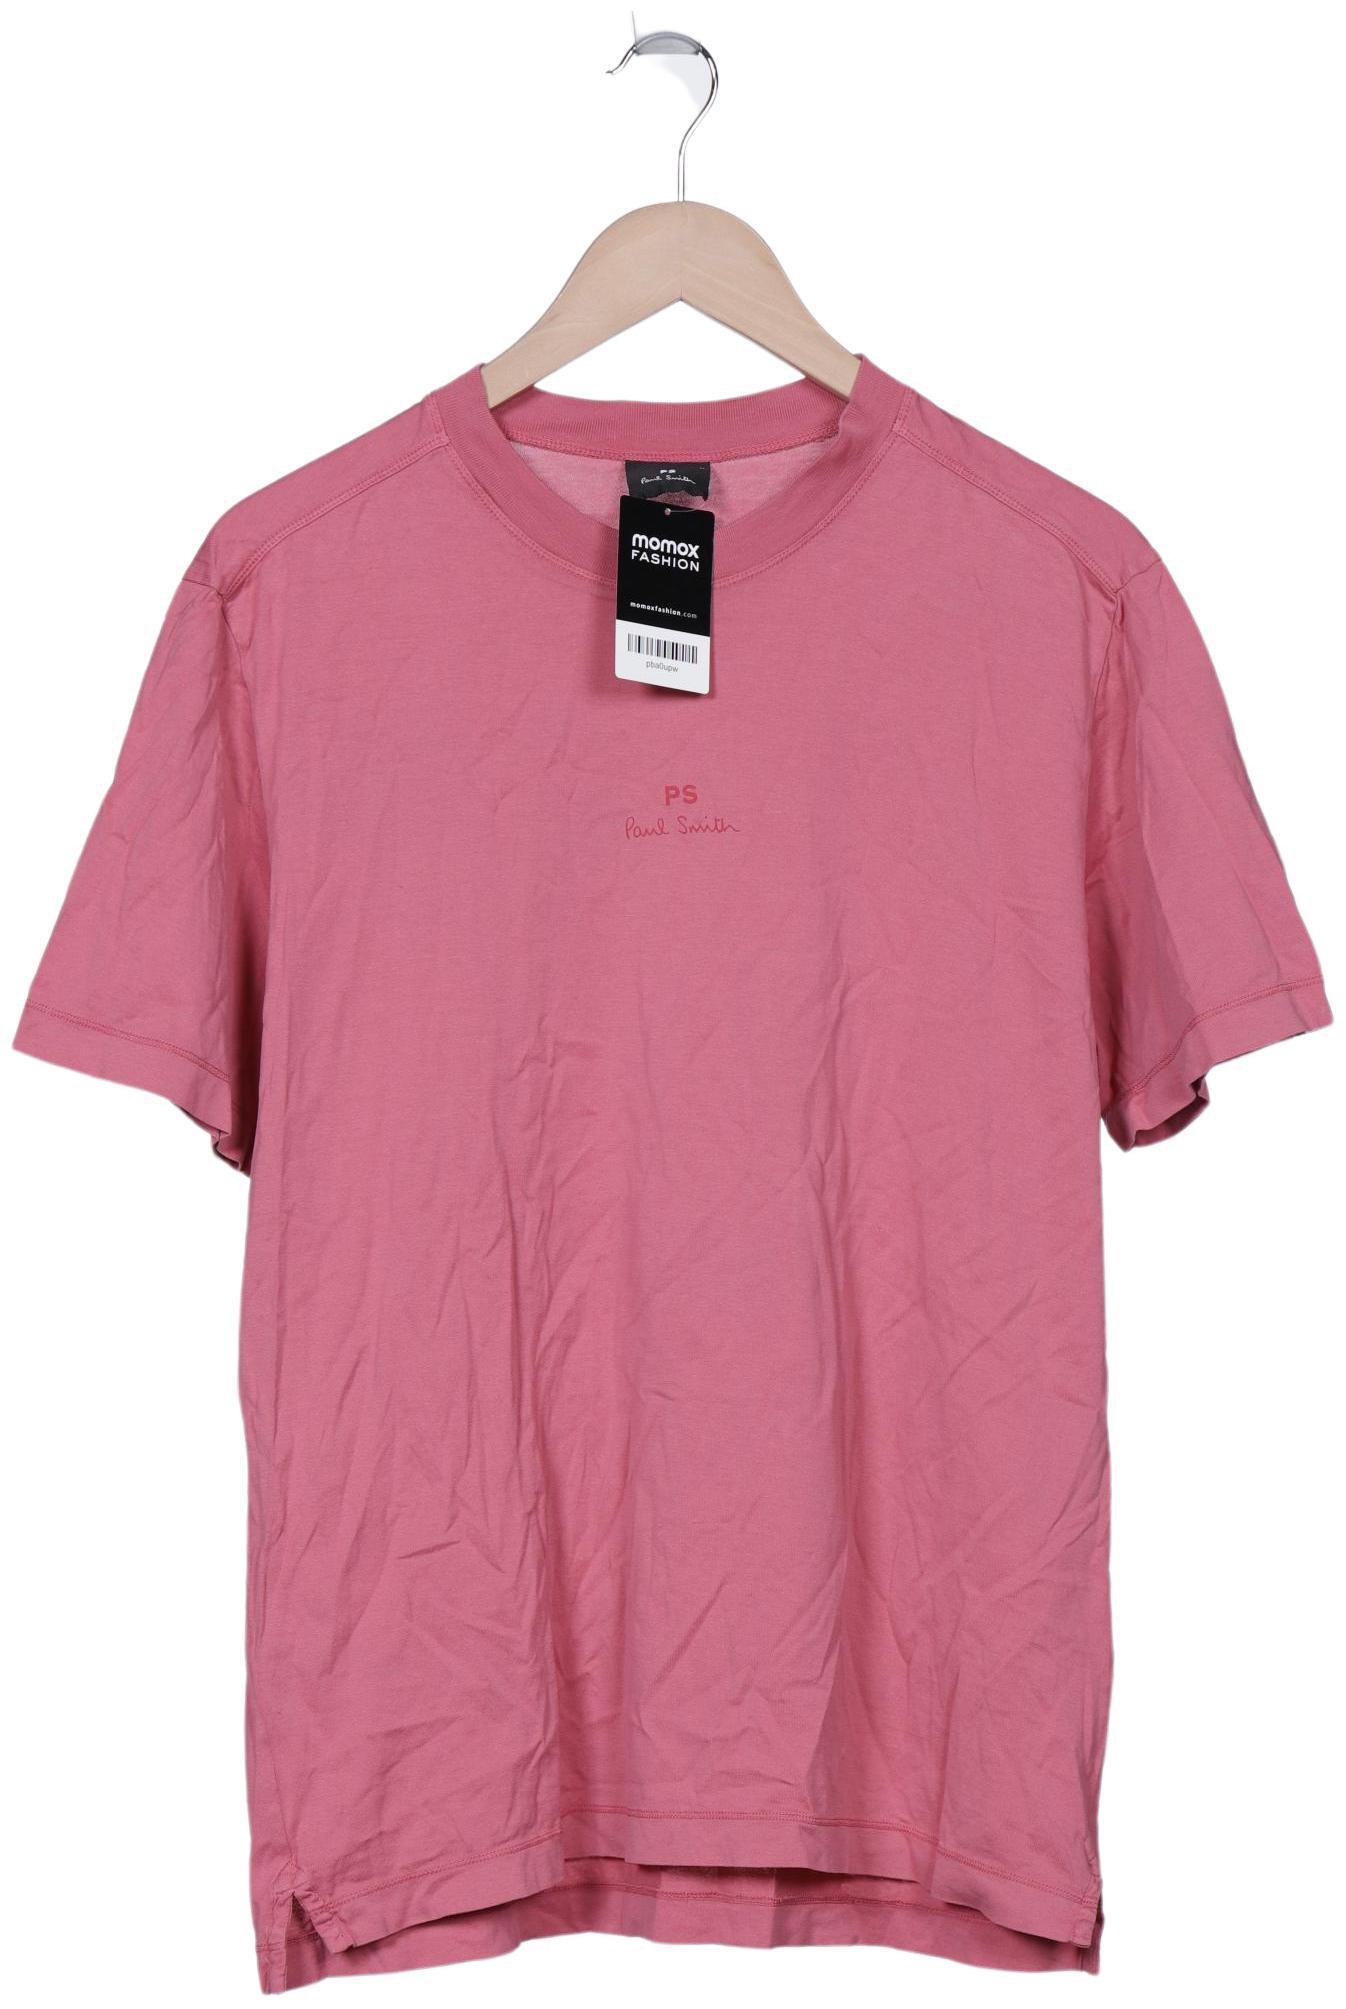 PS Paul Smith Herren T-Shirt, pink, Gr. 48 von PS Paul Smith